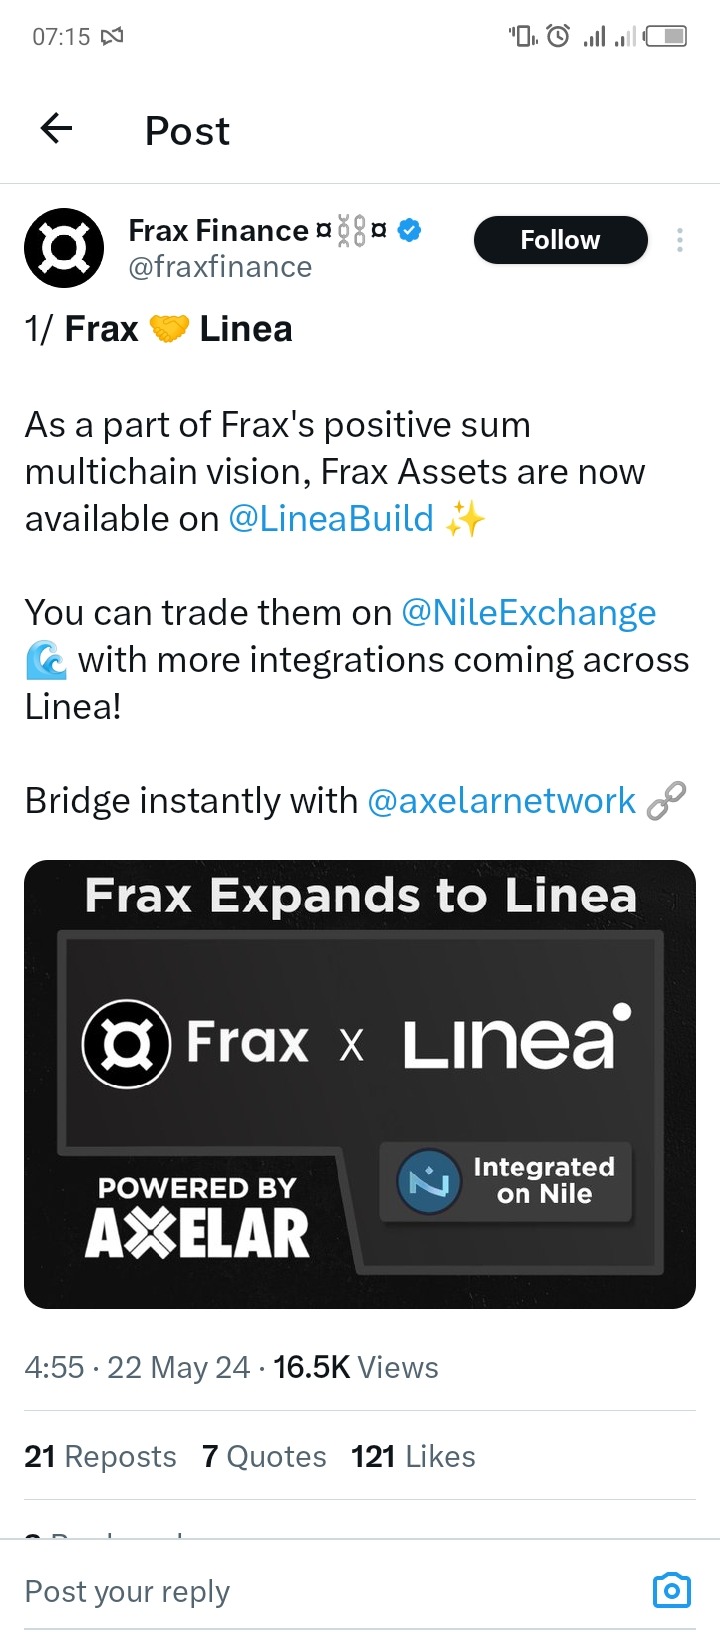 Impact of integration on Linea Build